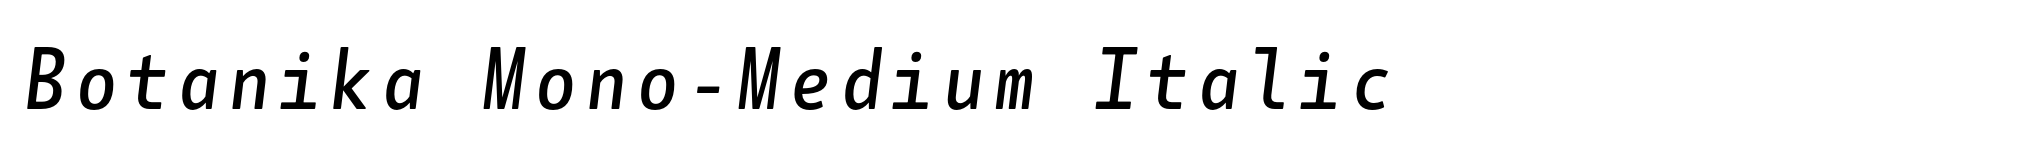 Botanika Mono-Medium Italic image